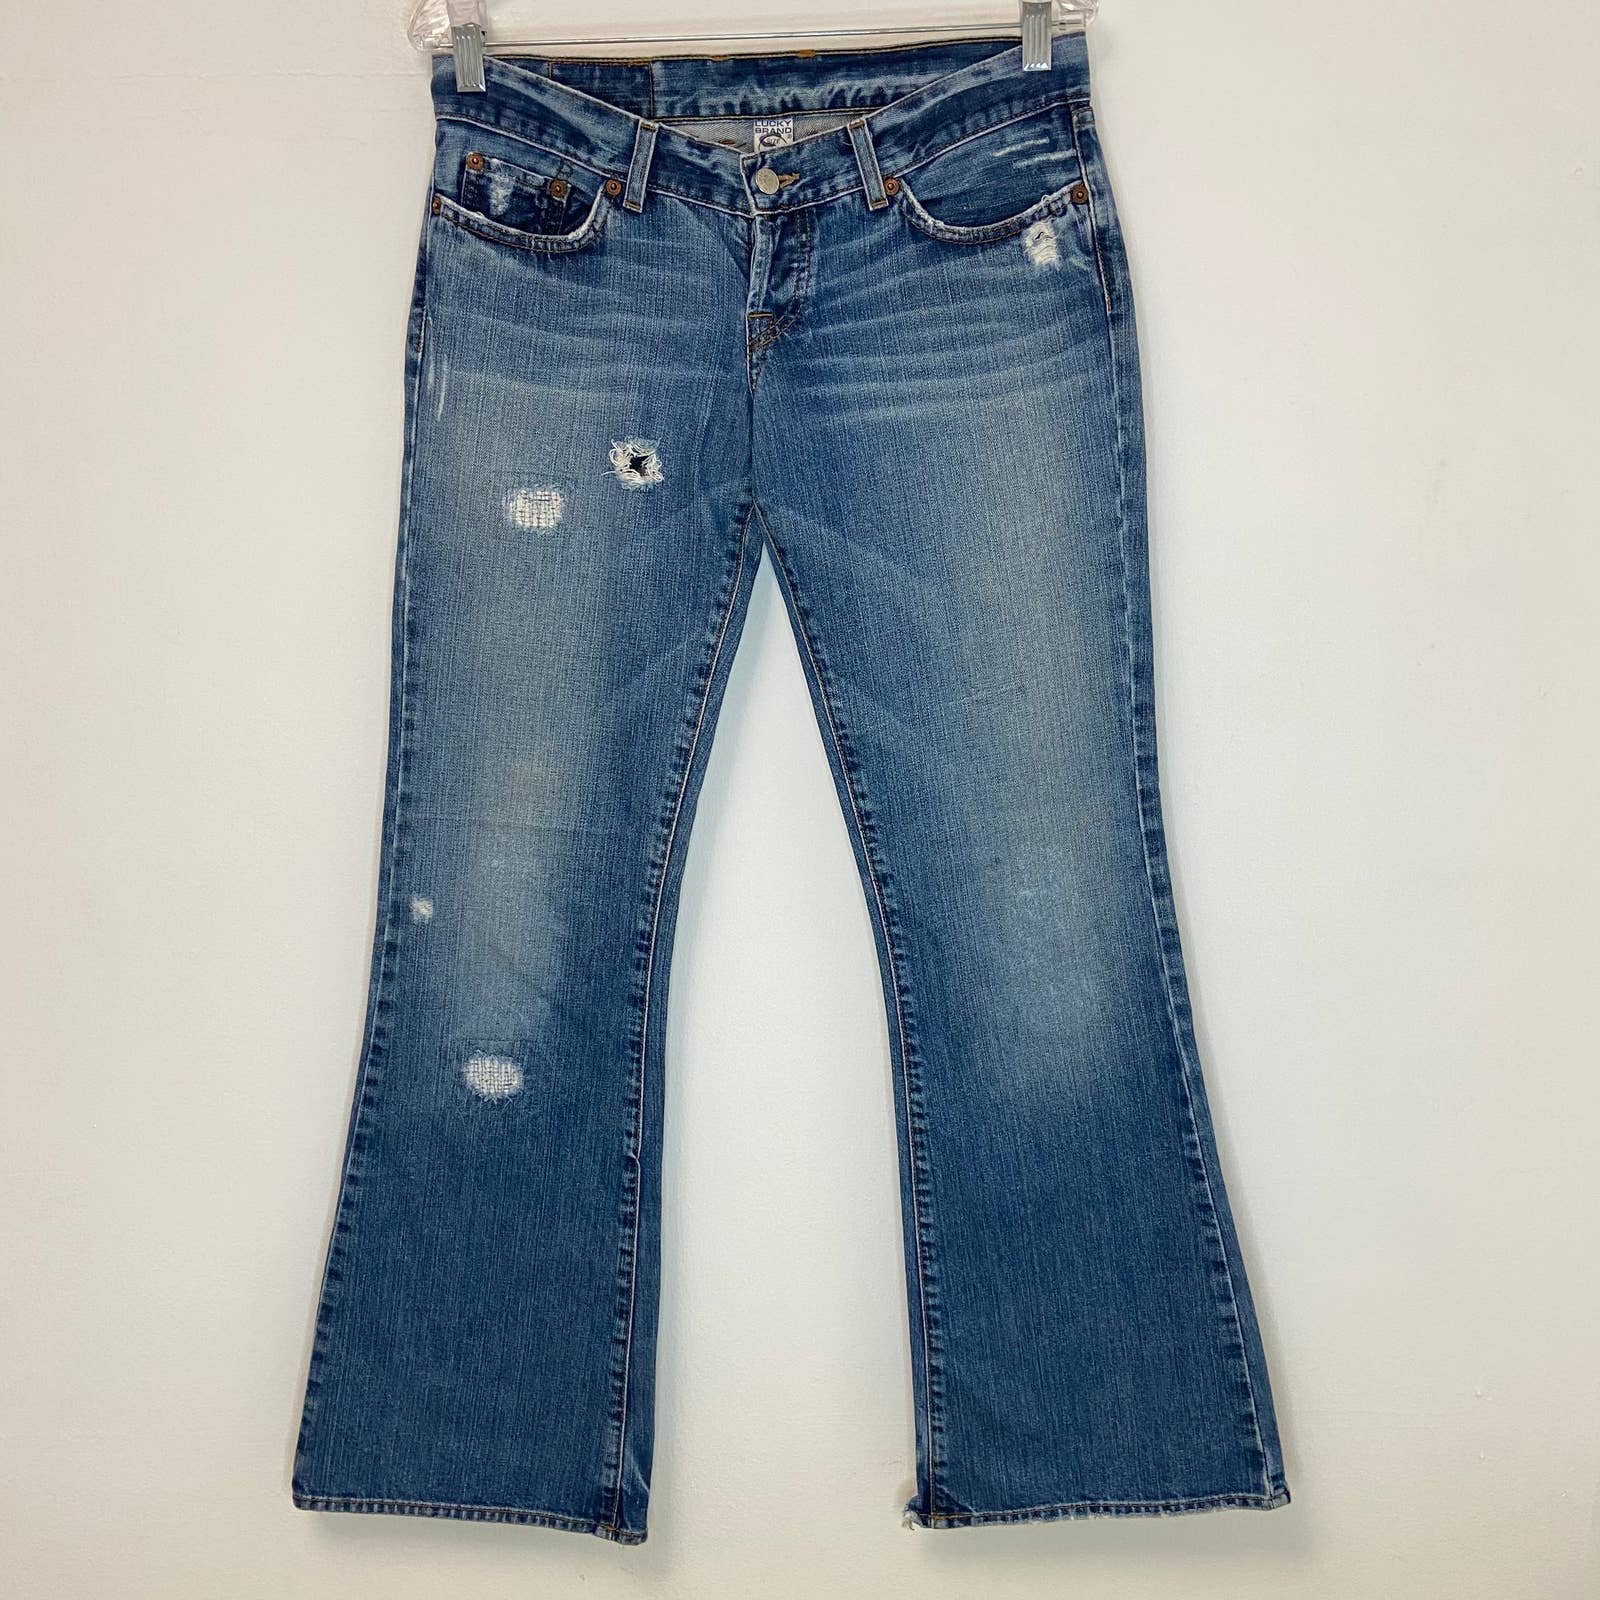 Popular Lucky Brand Distressed Jeans h5JdBi2Km New Style